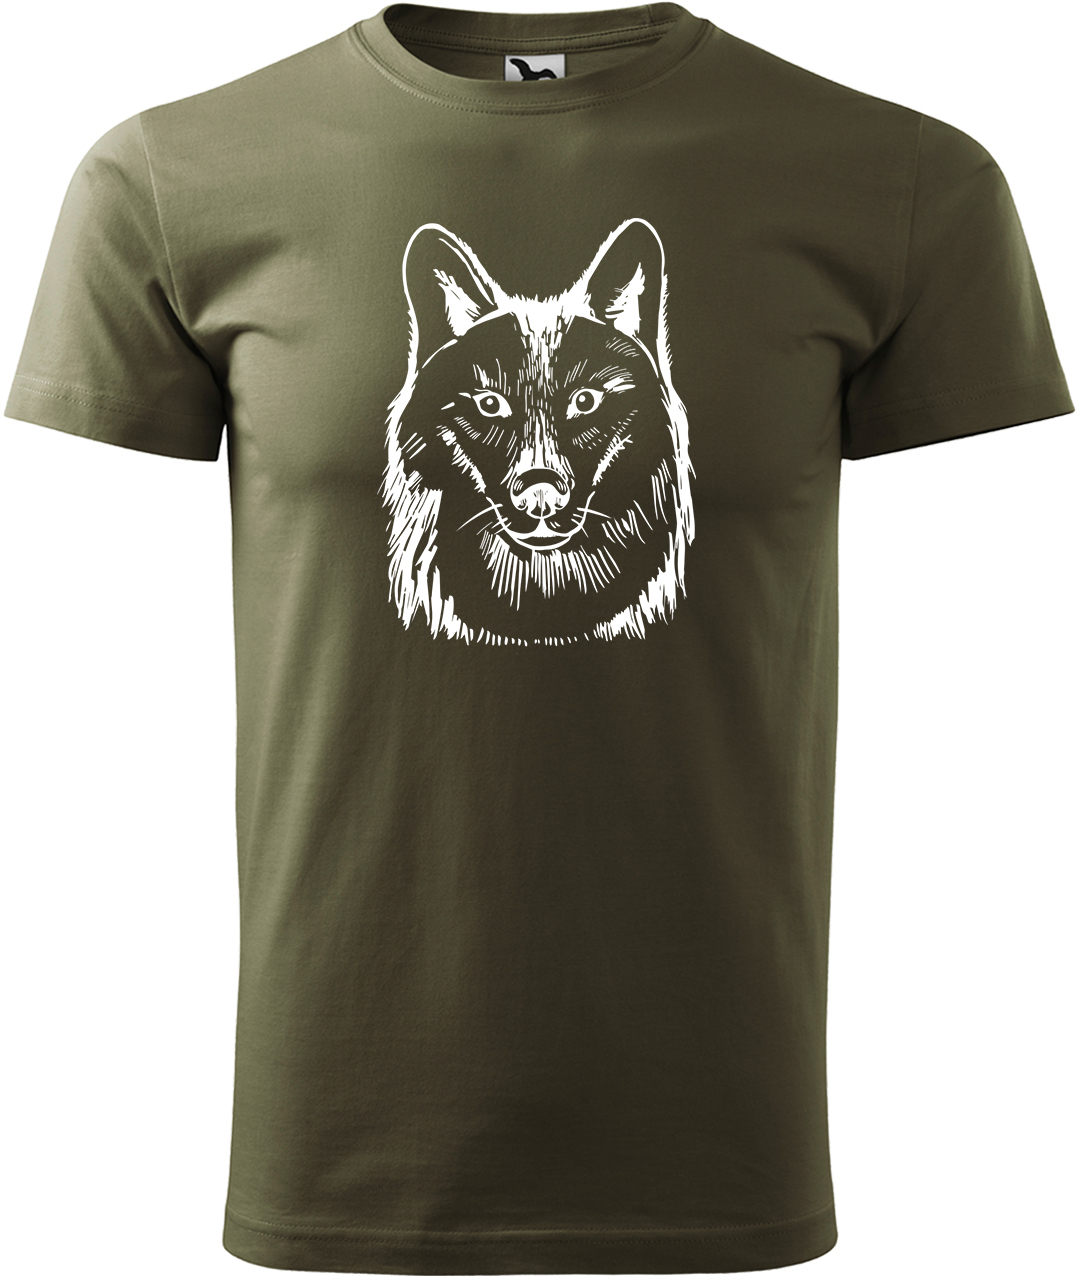 Pánské tričko s vlkem - Kresba vlka Velikost: XL, Barva: Military (69), Střih: pánský